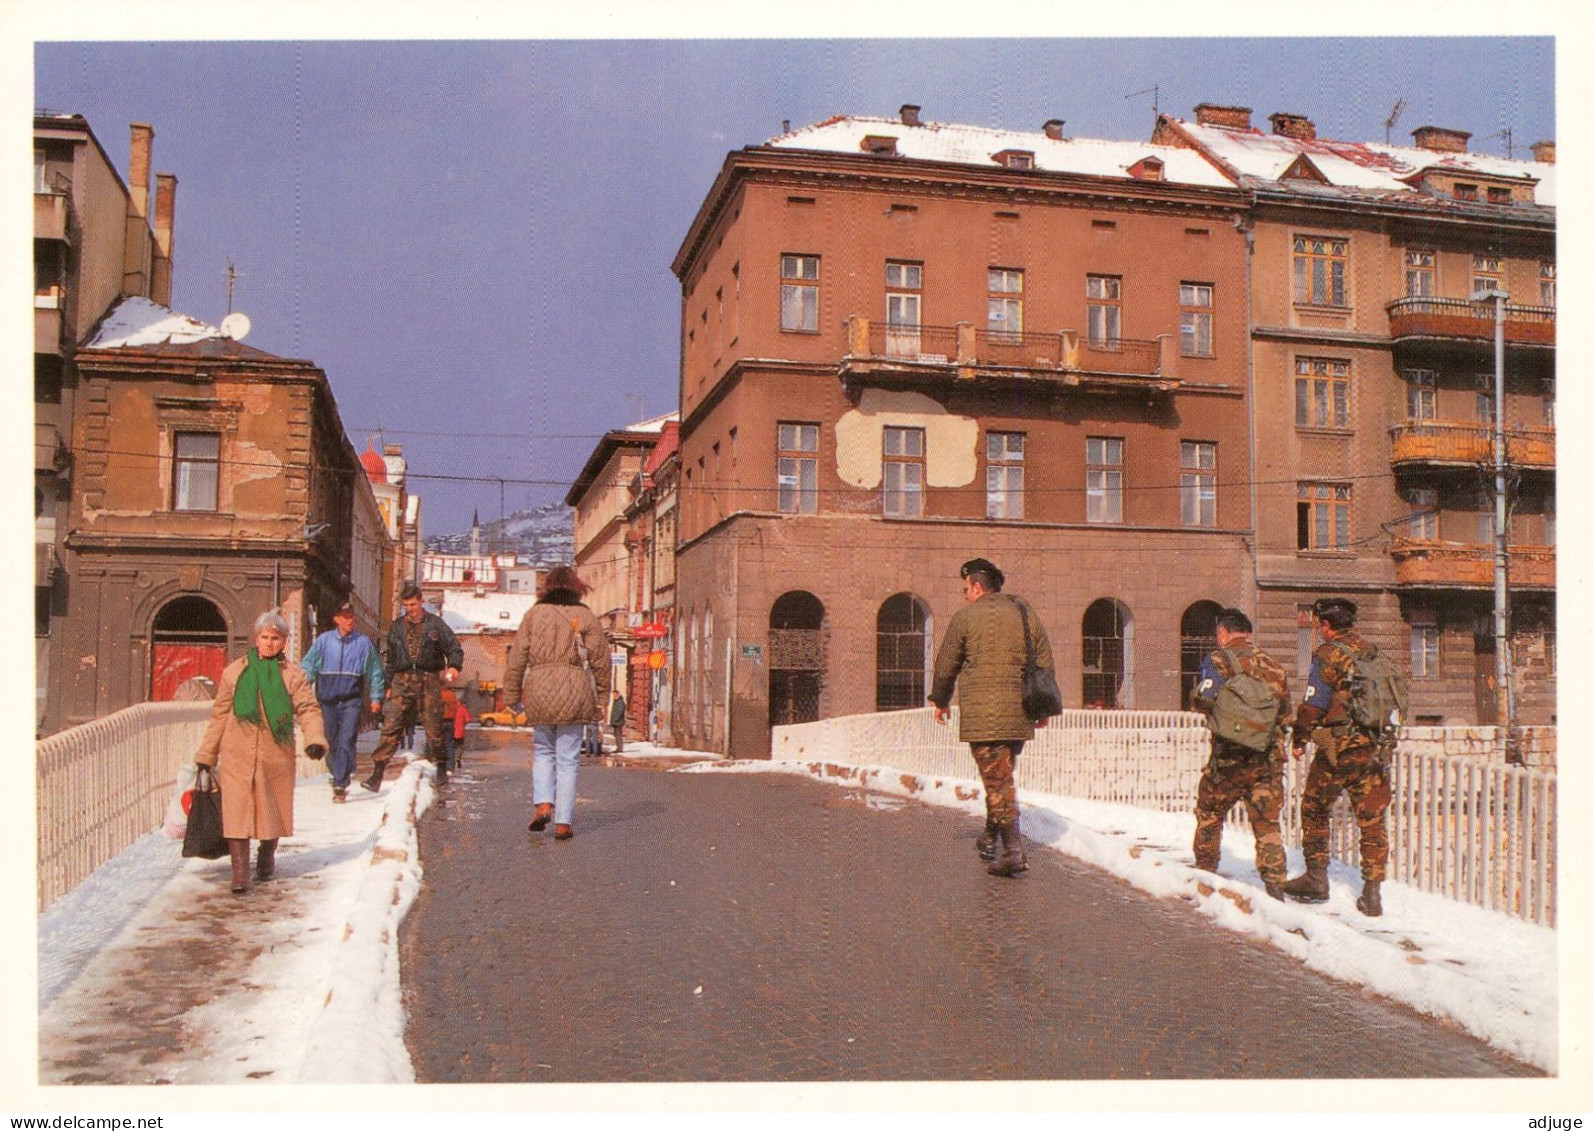 Guerre Bosnie-Herzegovine, SARAJEVO Pont Rivière "MILJACKA"* Carrefour Tragique Où Fut Assassiné L'empereur D*Photo IFOR - Bosnia And Herzegovina